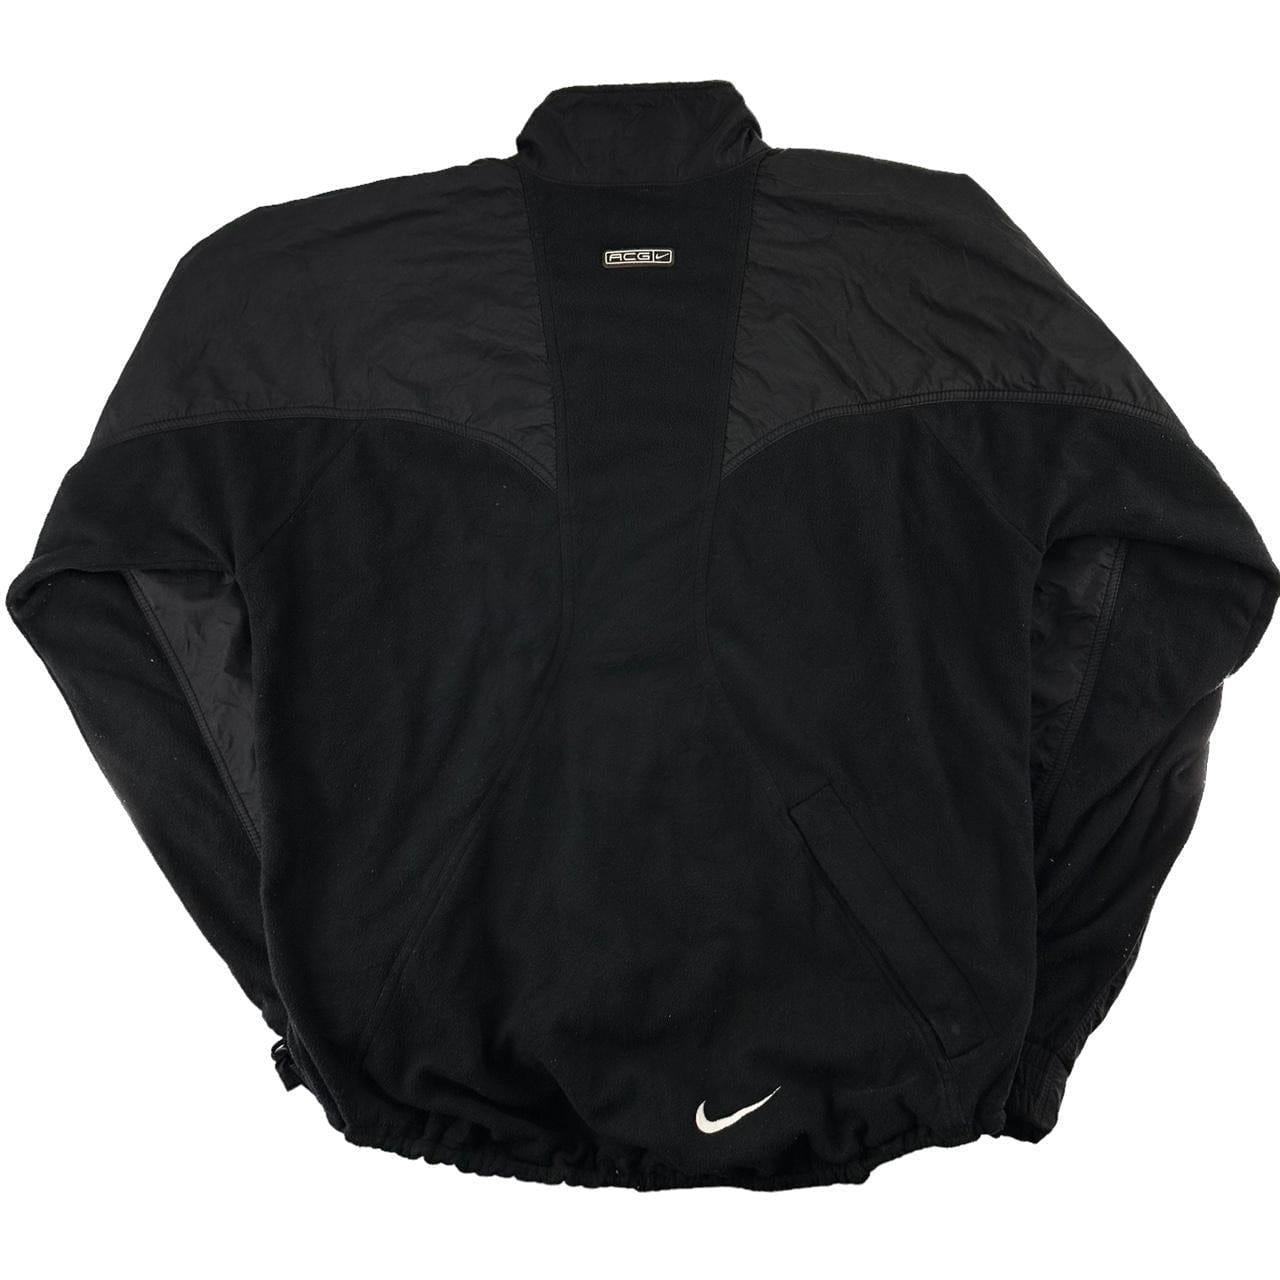 Vintage Nike ACG jacket size L - Known Source